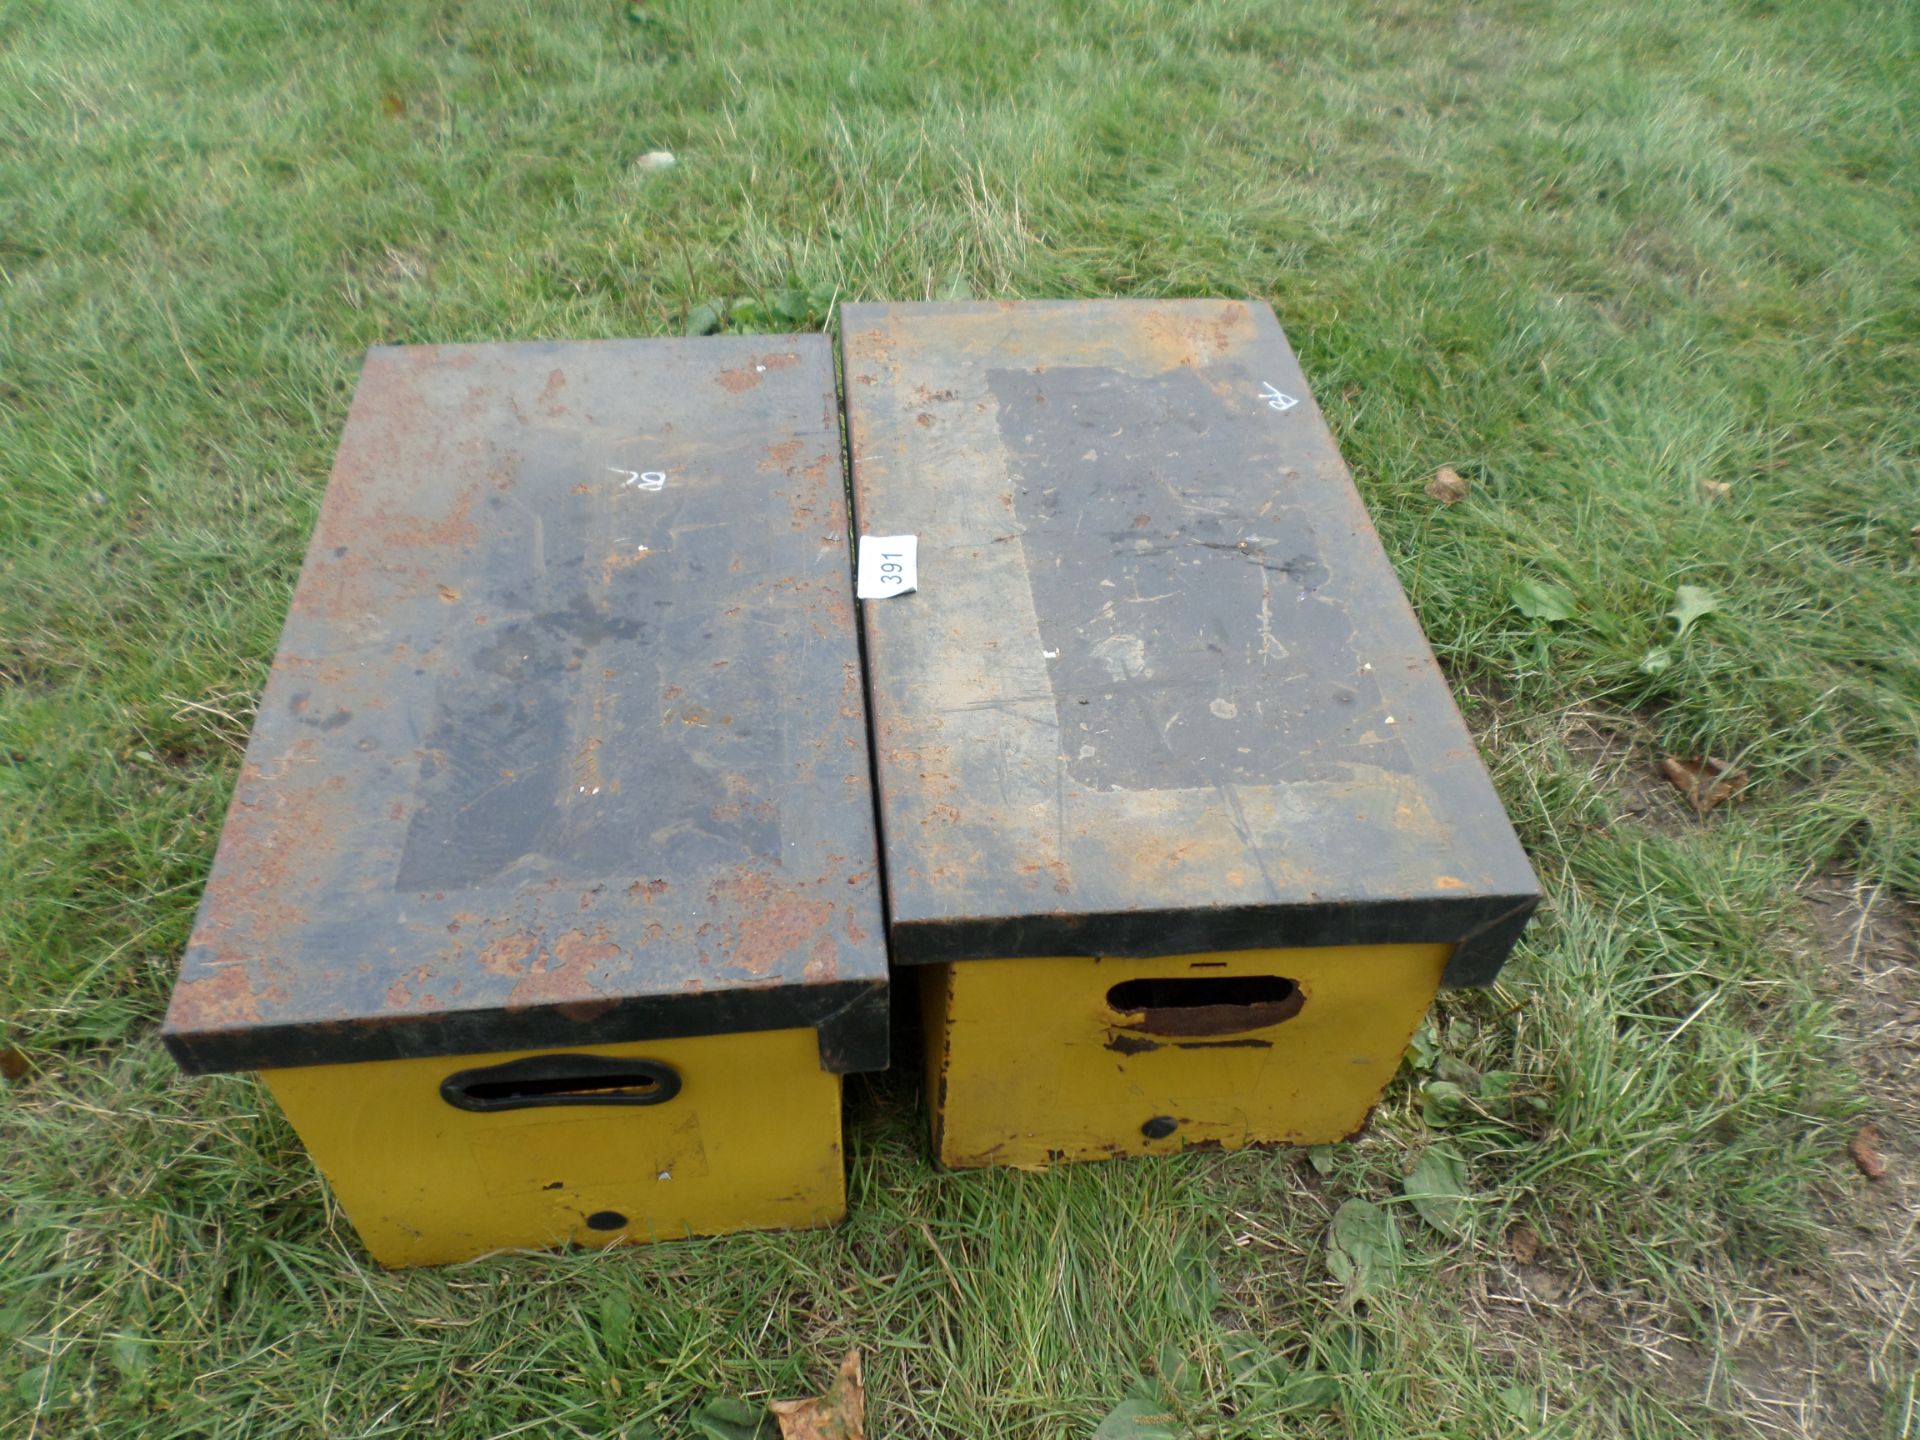 2 van vault tool boxes